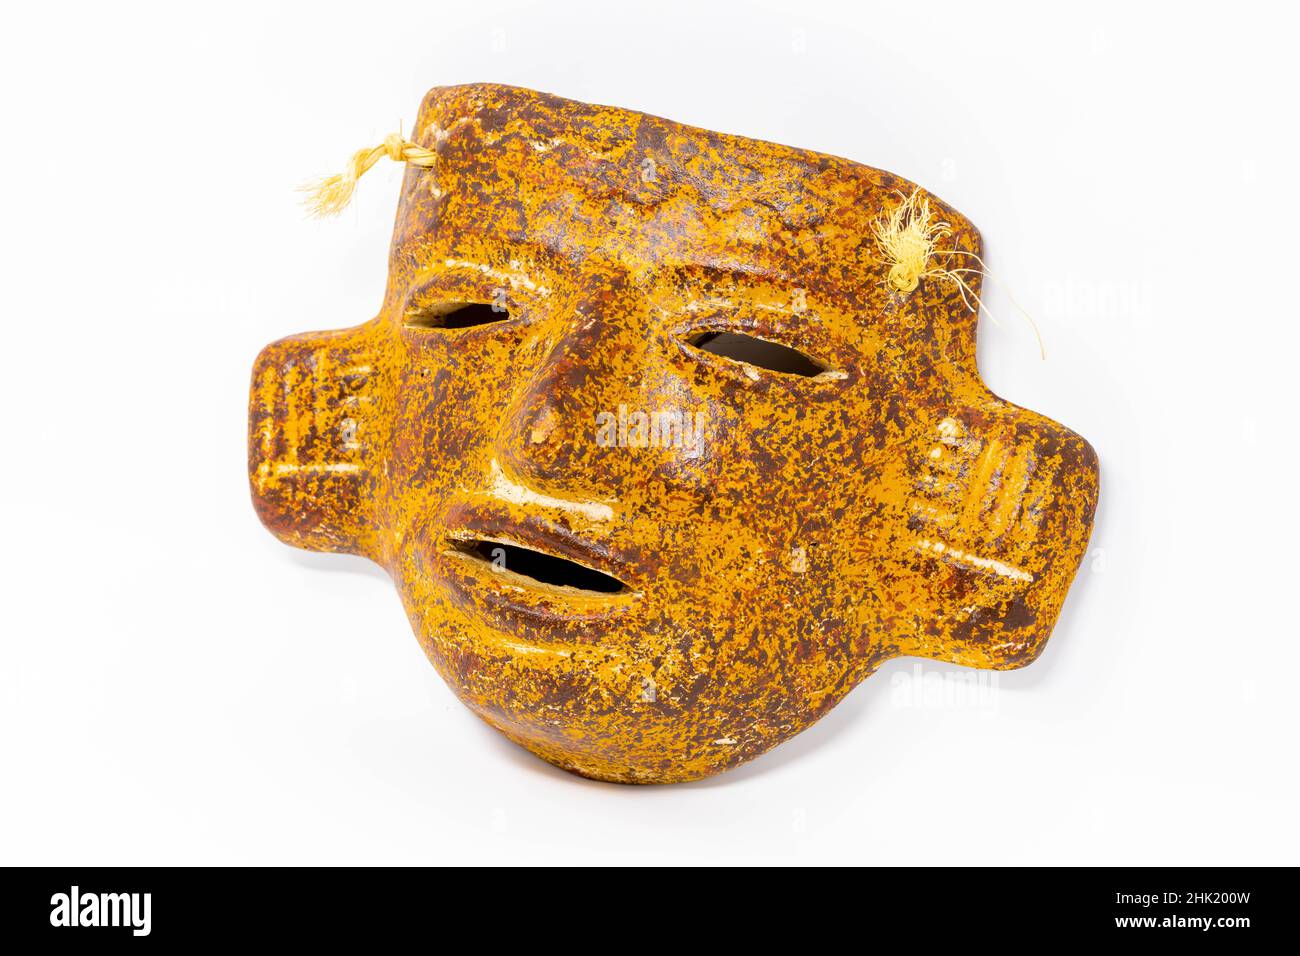 Traditional aztec ceramic face mask decorative isolated Stock Photo